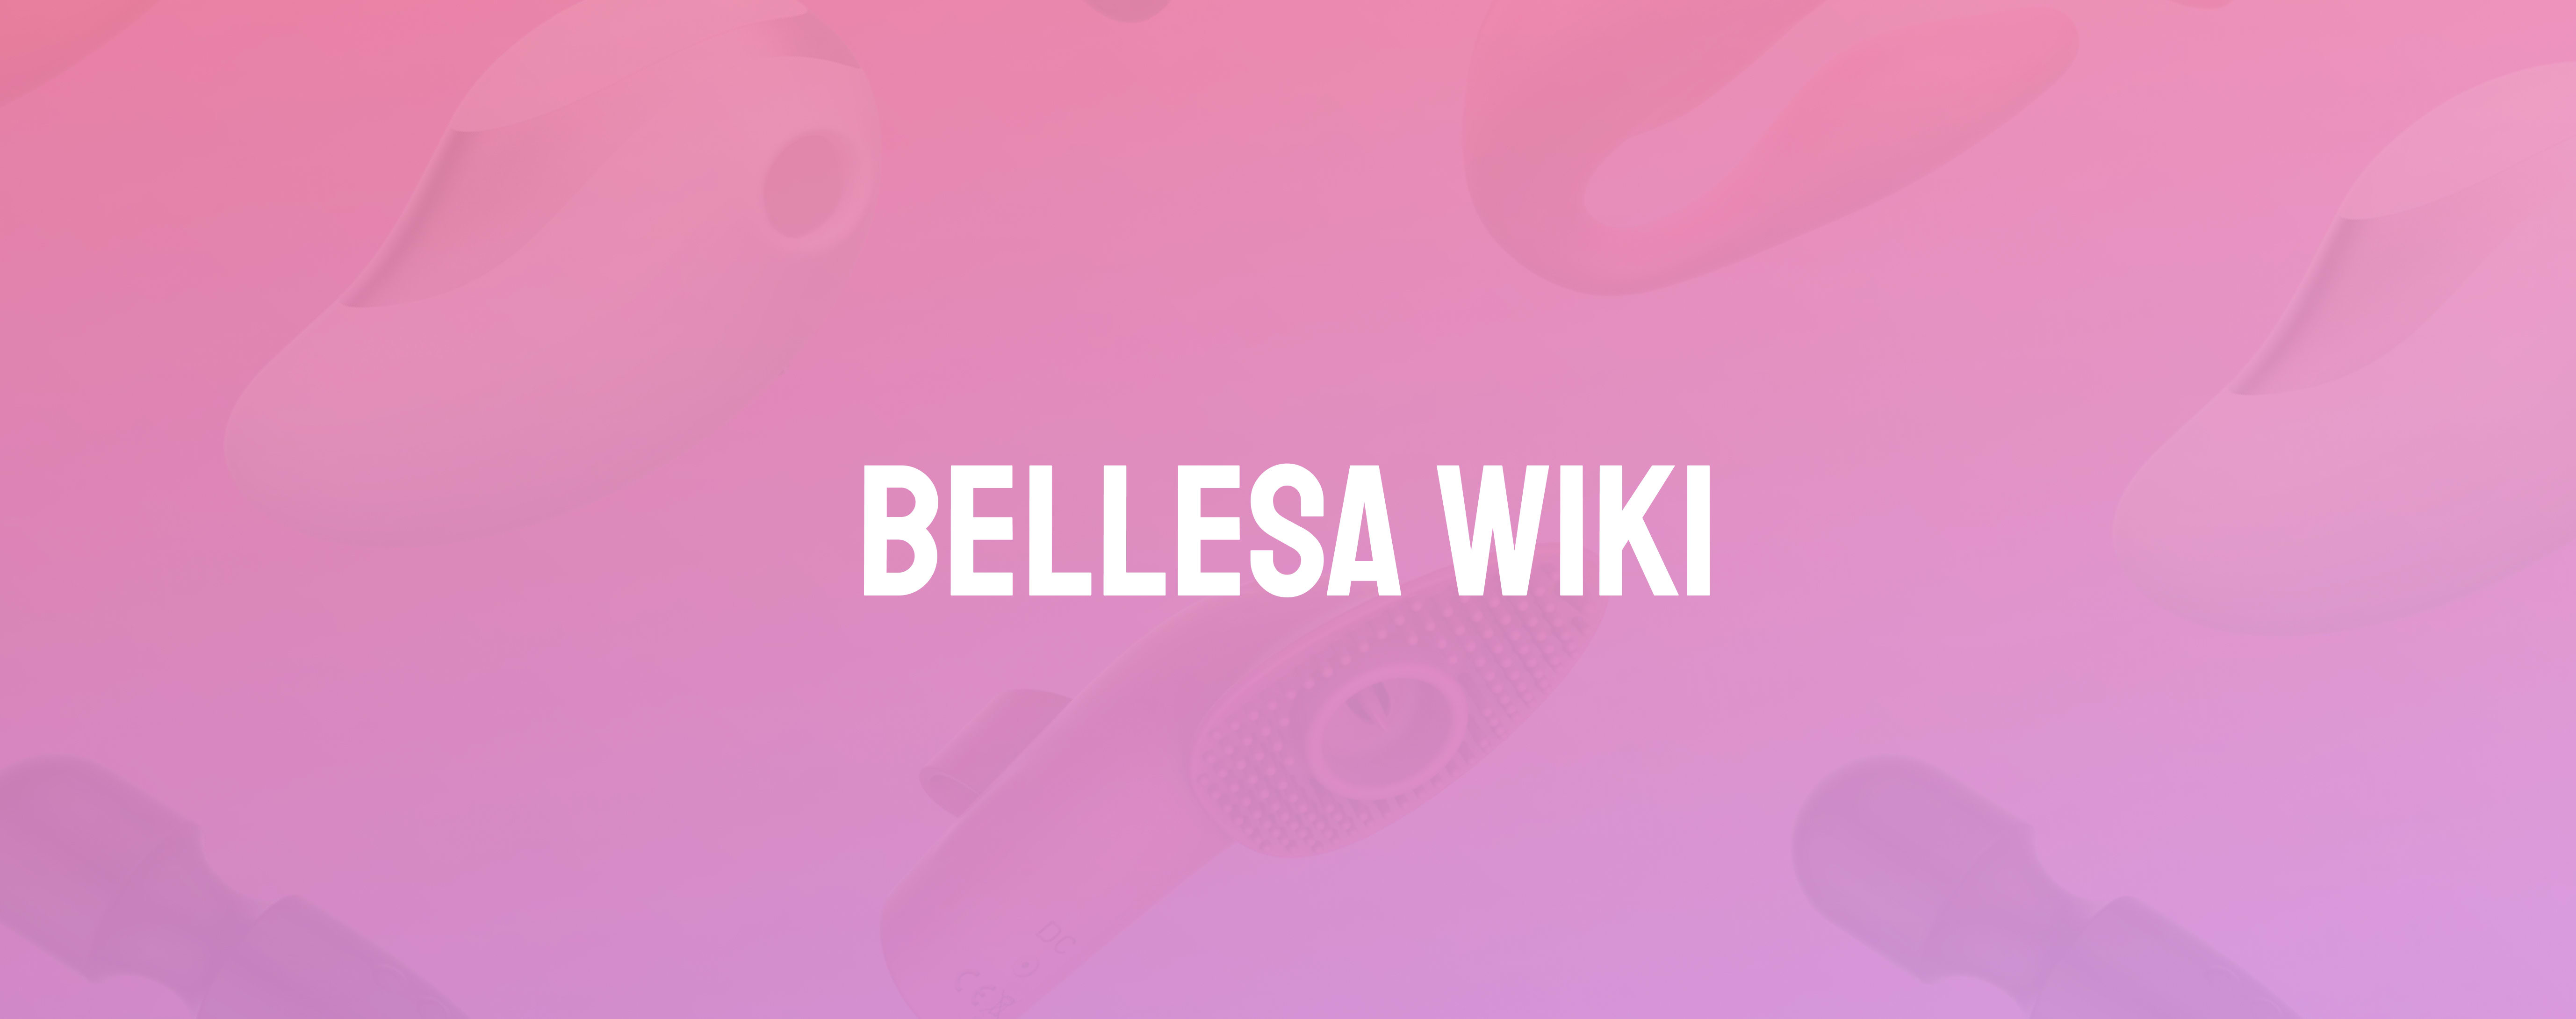 Bisexual - Bellesa Wiki Bellesa photo